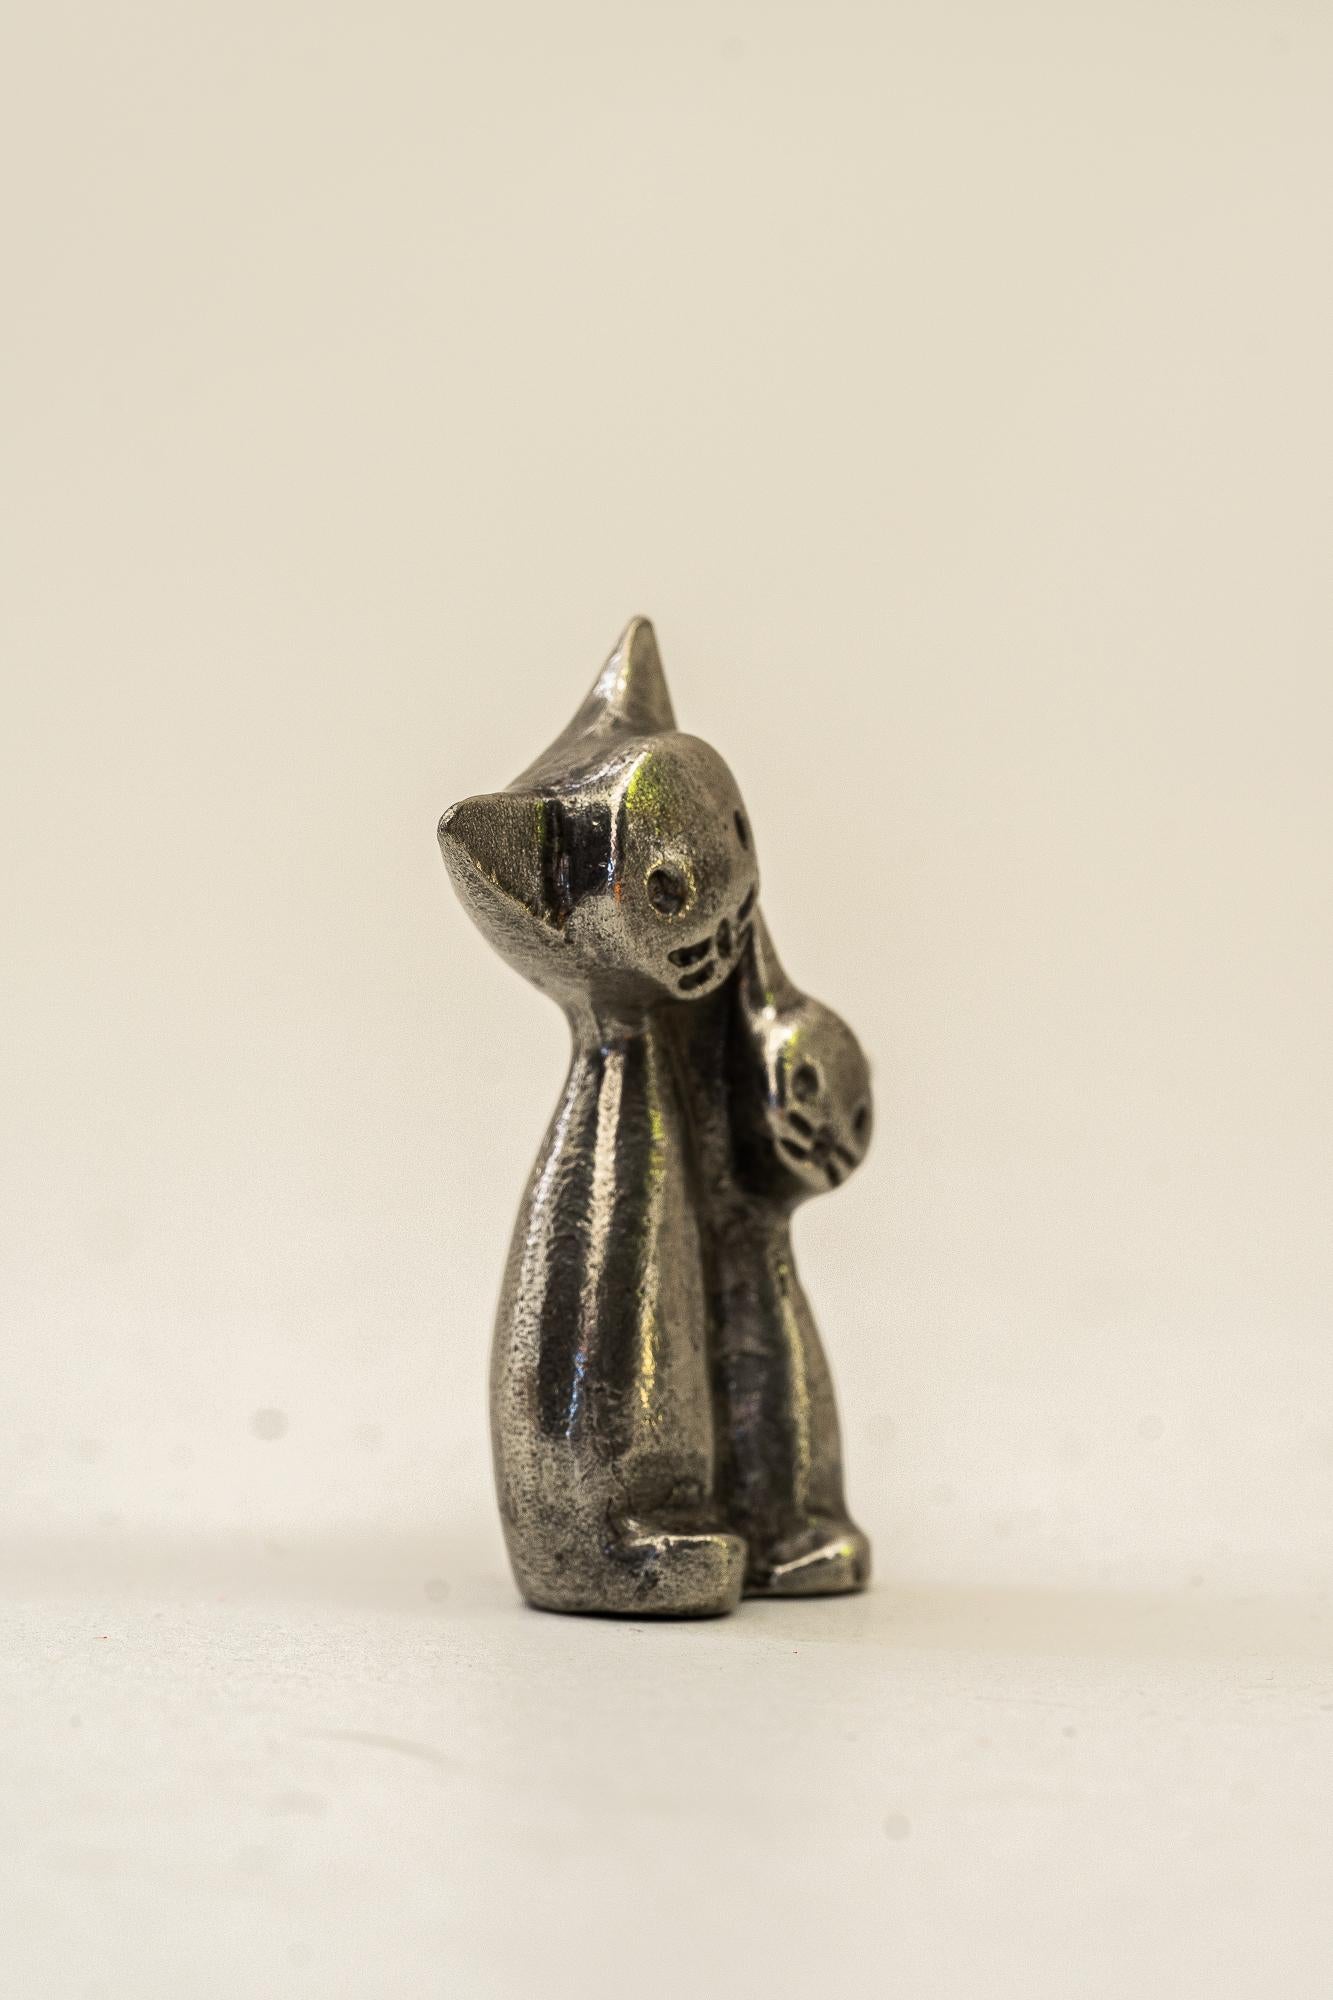 Small Walter bosse cat figurine around 1950s
Brass, Nickel - plated
Original condition.